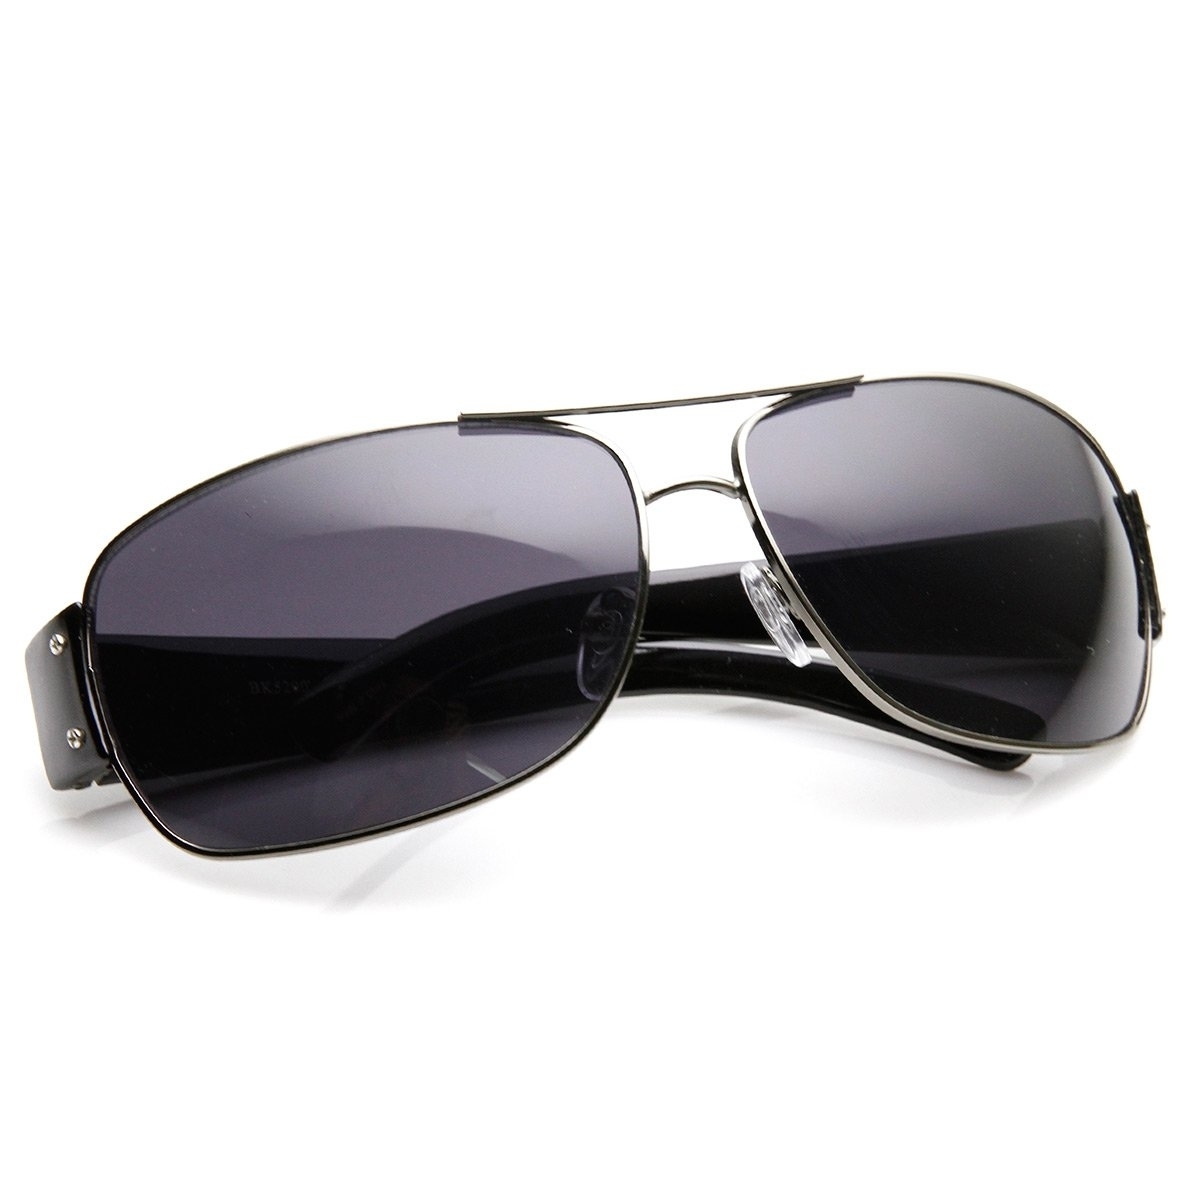 Modern Fashion Active Sport Red Stripe Metal Aviator Sunglasses - Black-Gold Brown